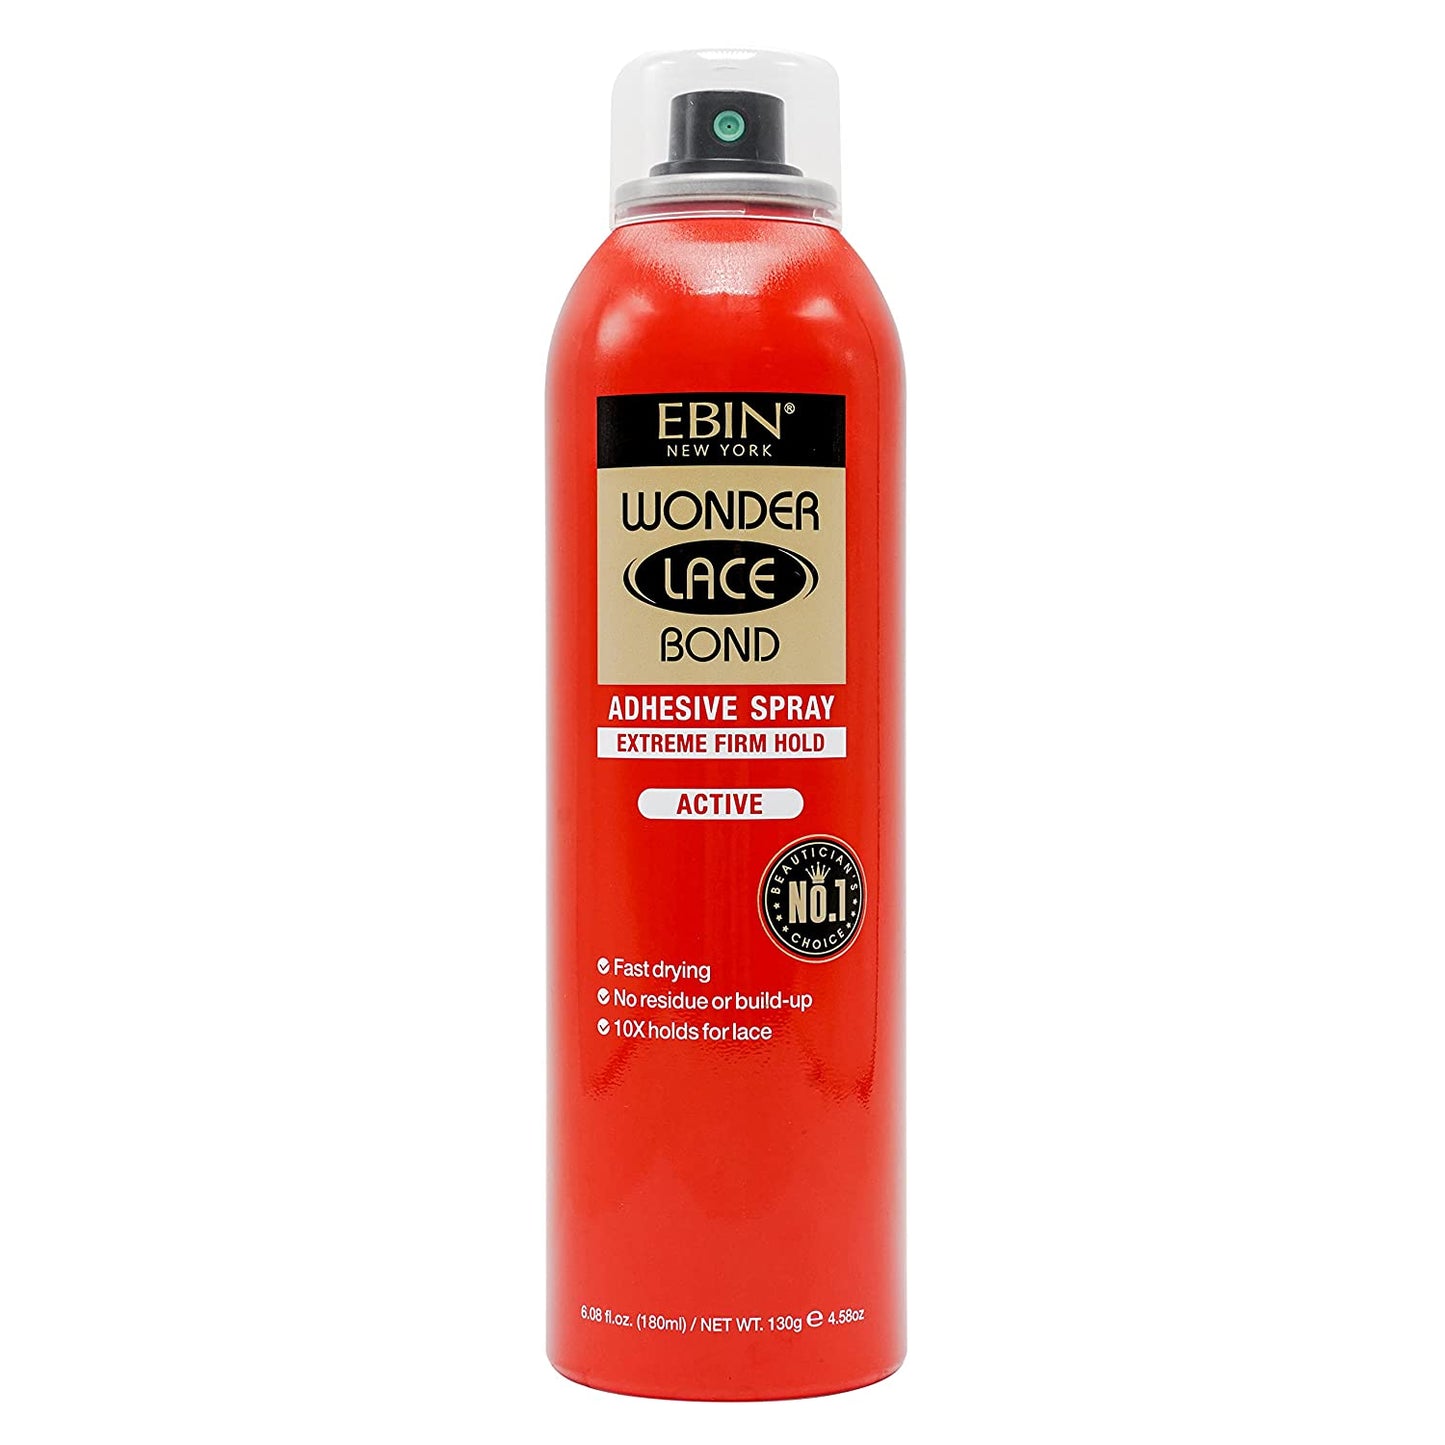 Ebin New York Wonder Lace Bond Spray adhésif (tenue ferme extrême, 180 ml)